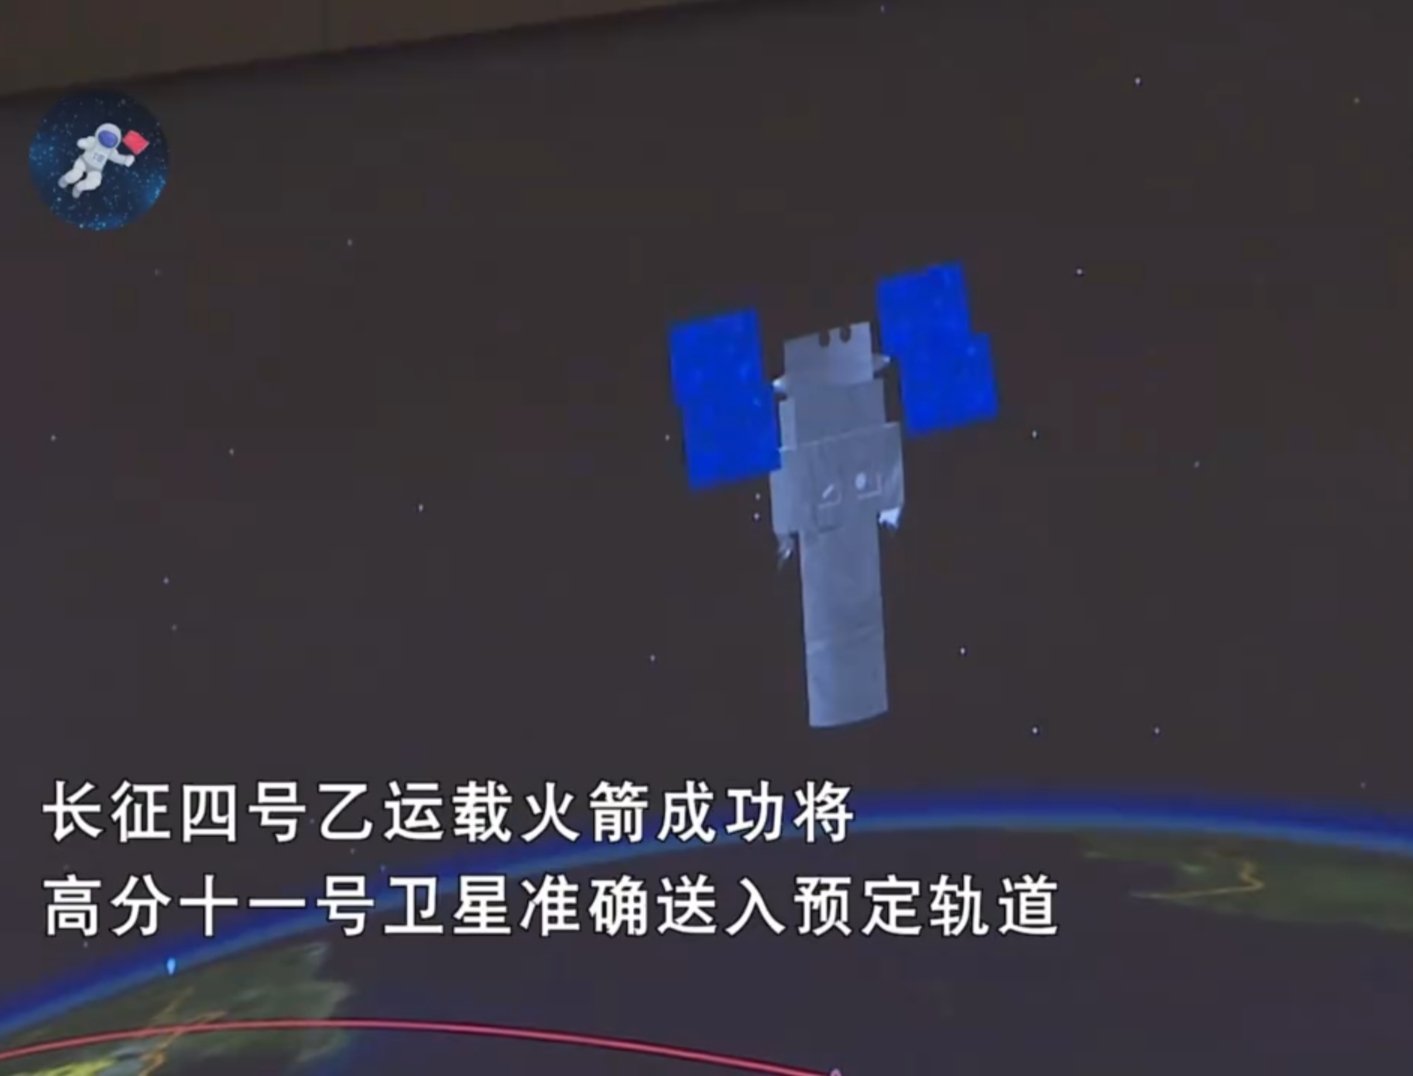 Gaofen-11-01 optical satellite.jpg